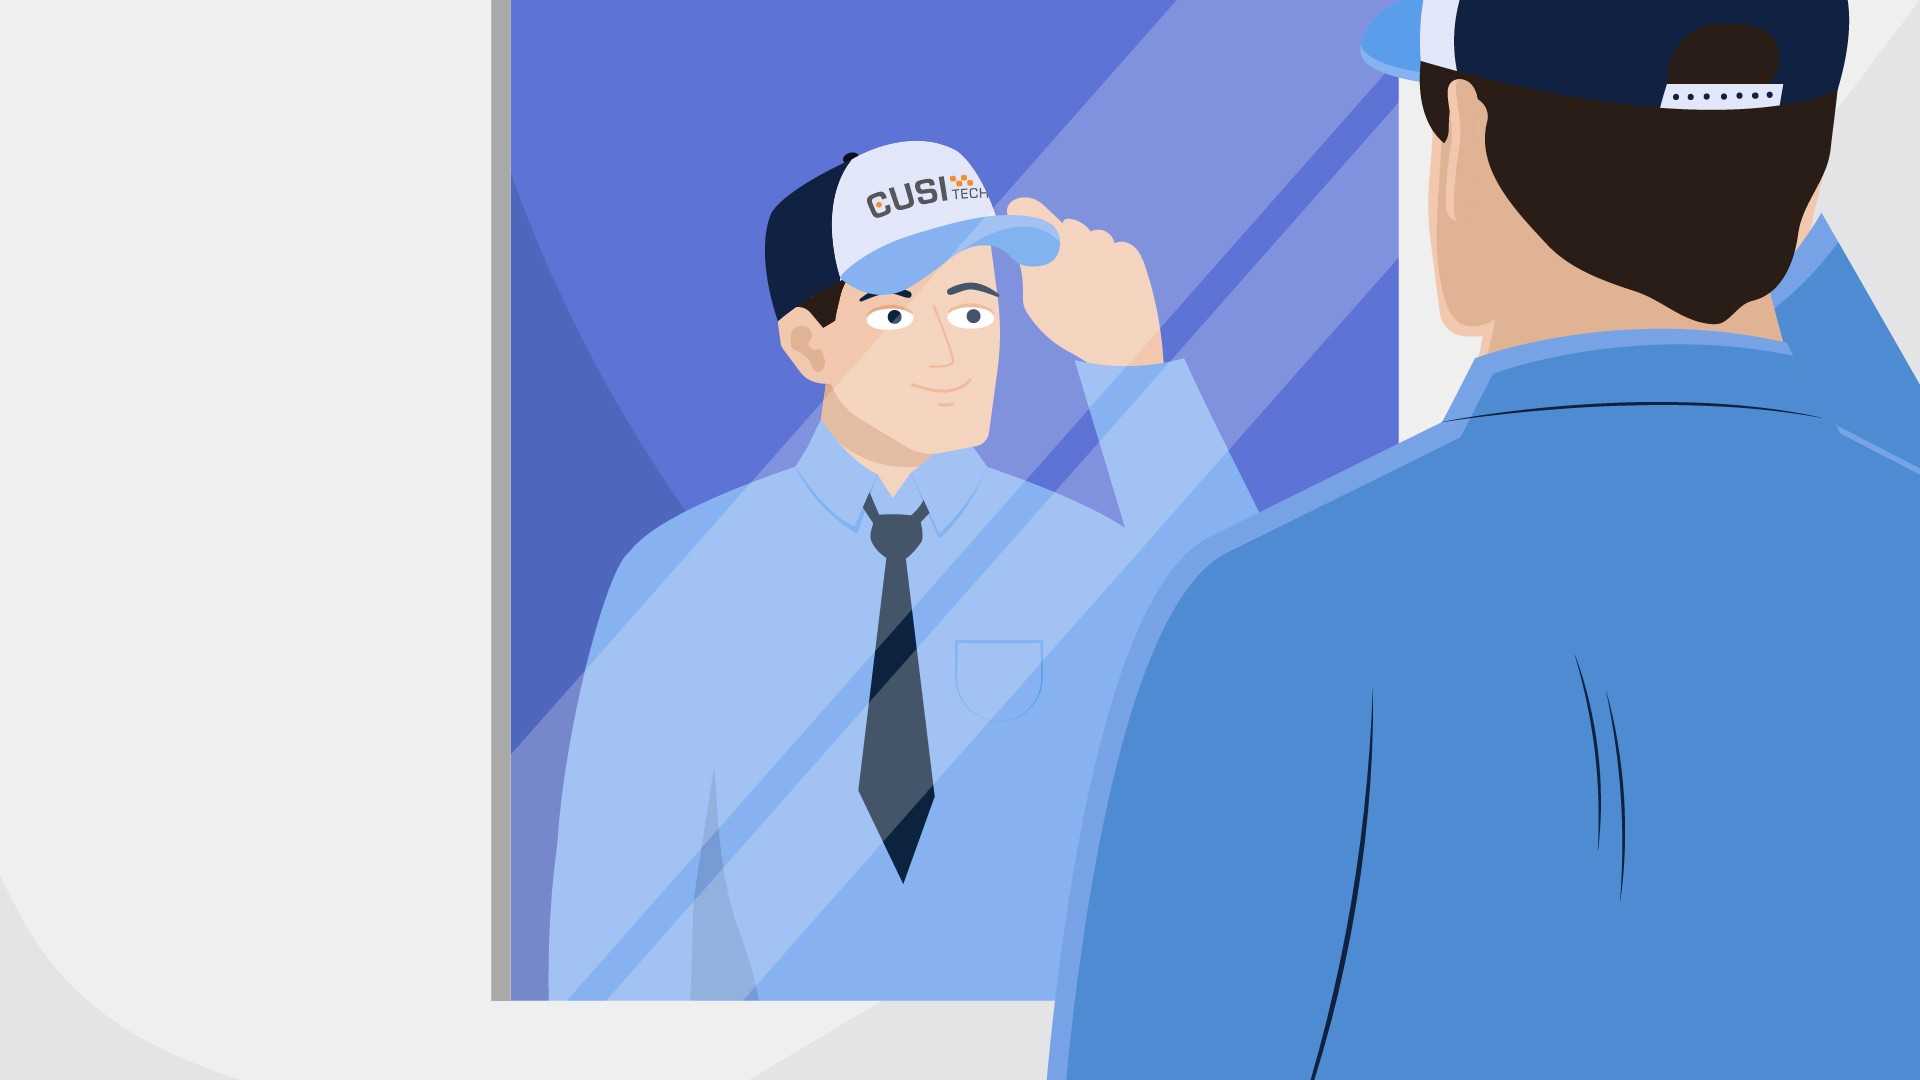 CUISITech employee - Character Animation